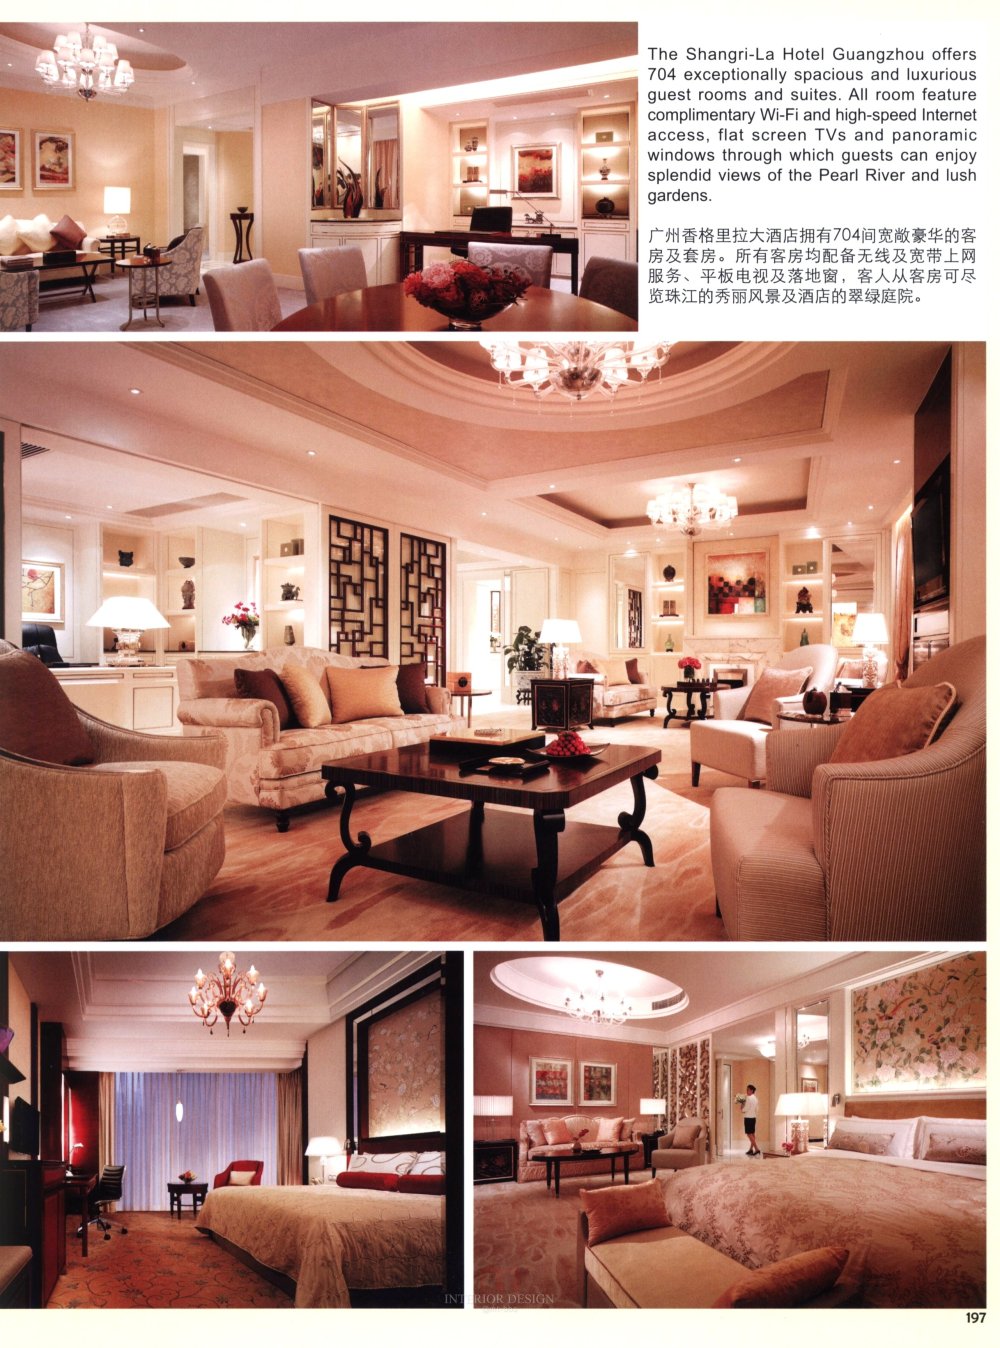 101全球酒店客房 101HOTELS GUEST ROOMS_图站_AiJpgg_com_192.jpg